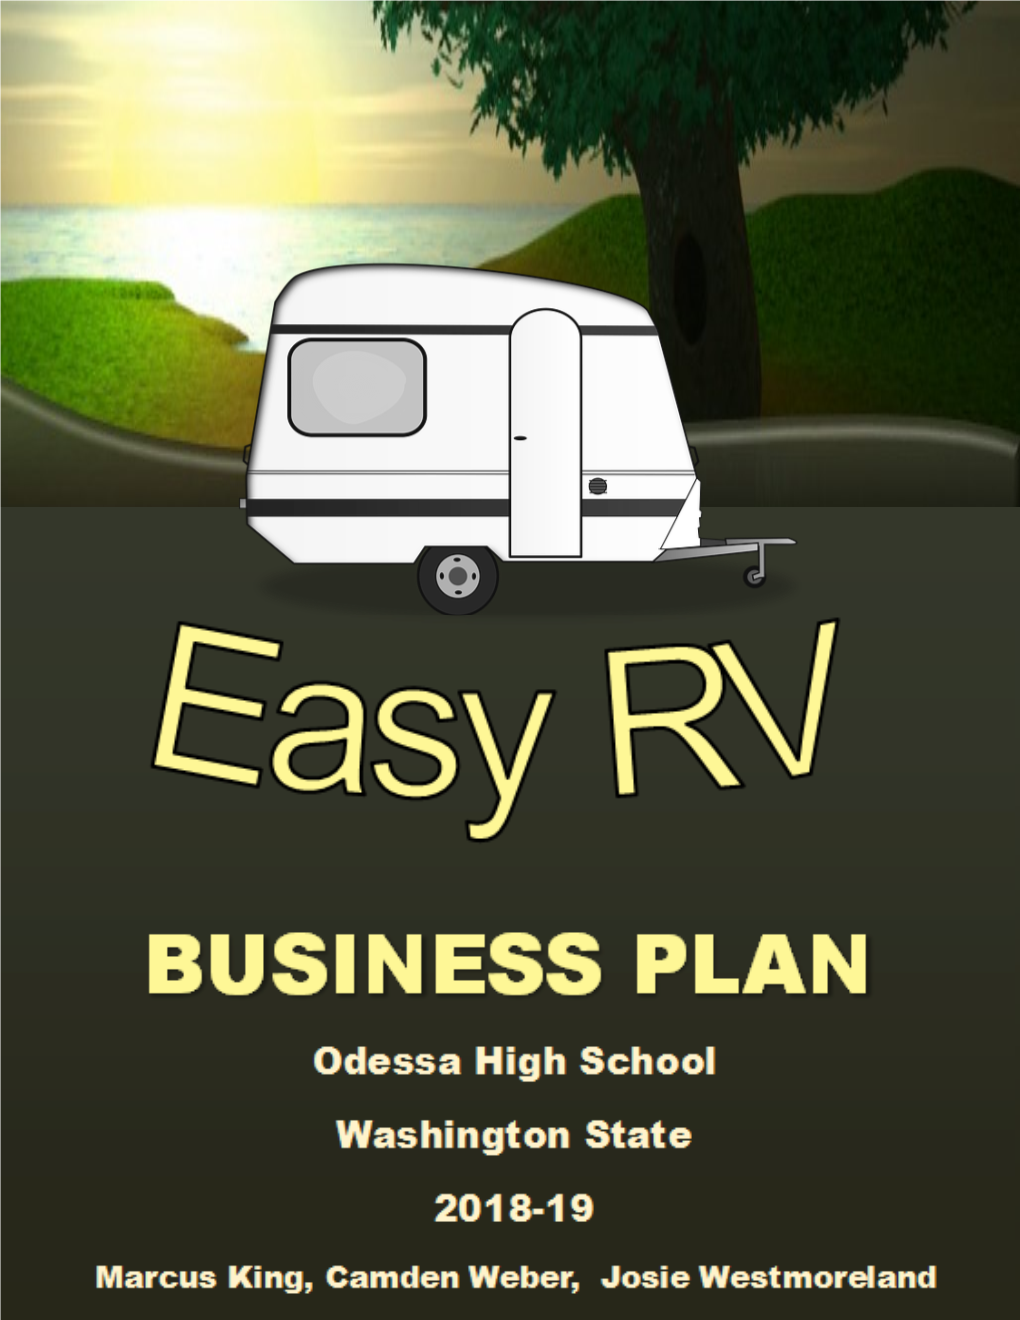 BUSINESS PLAN Odessa High School Washington State 2018-19